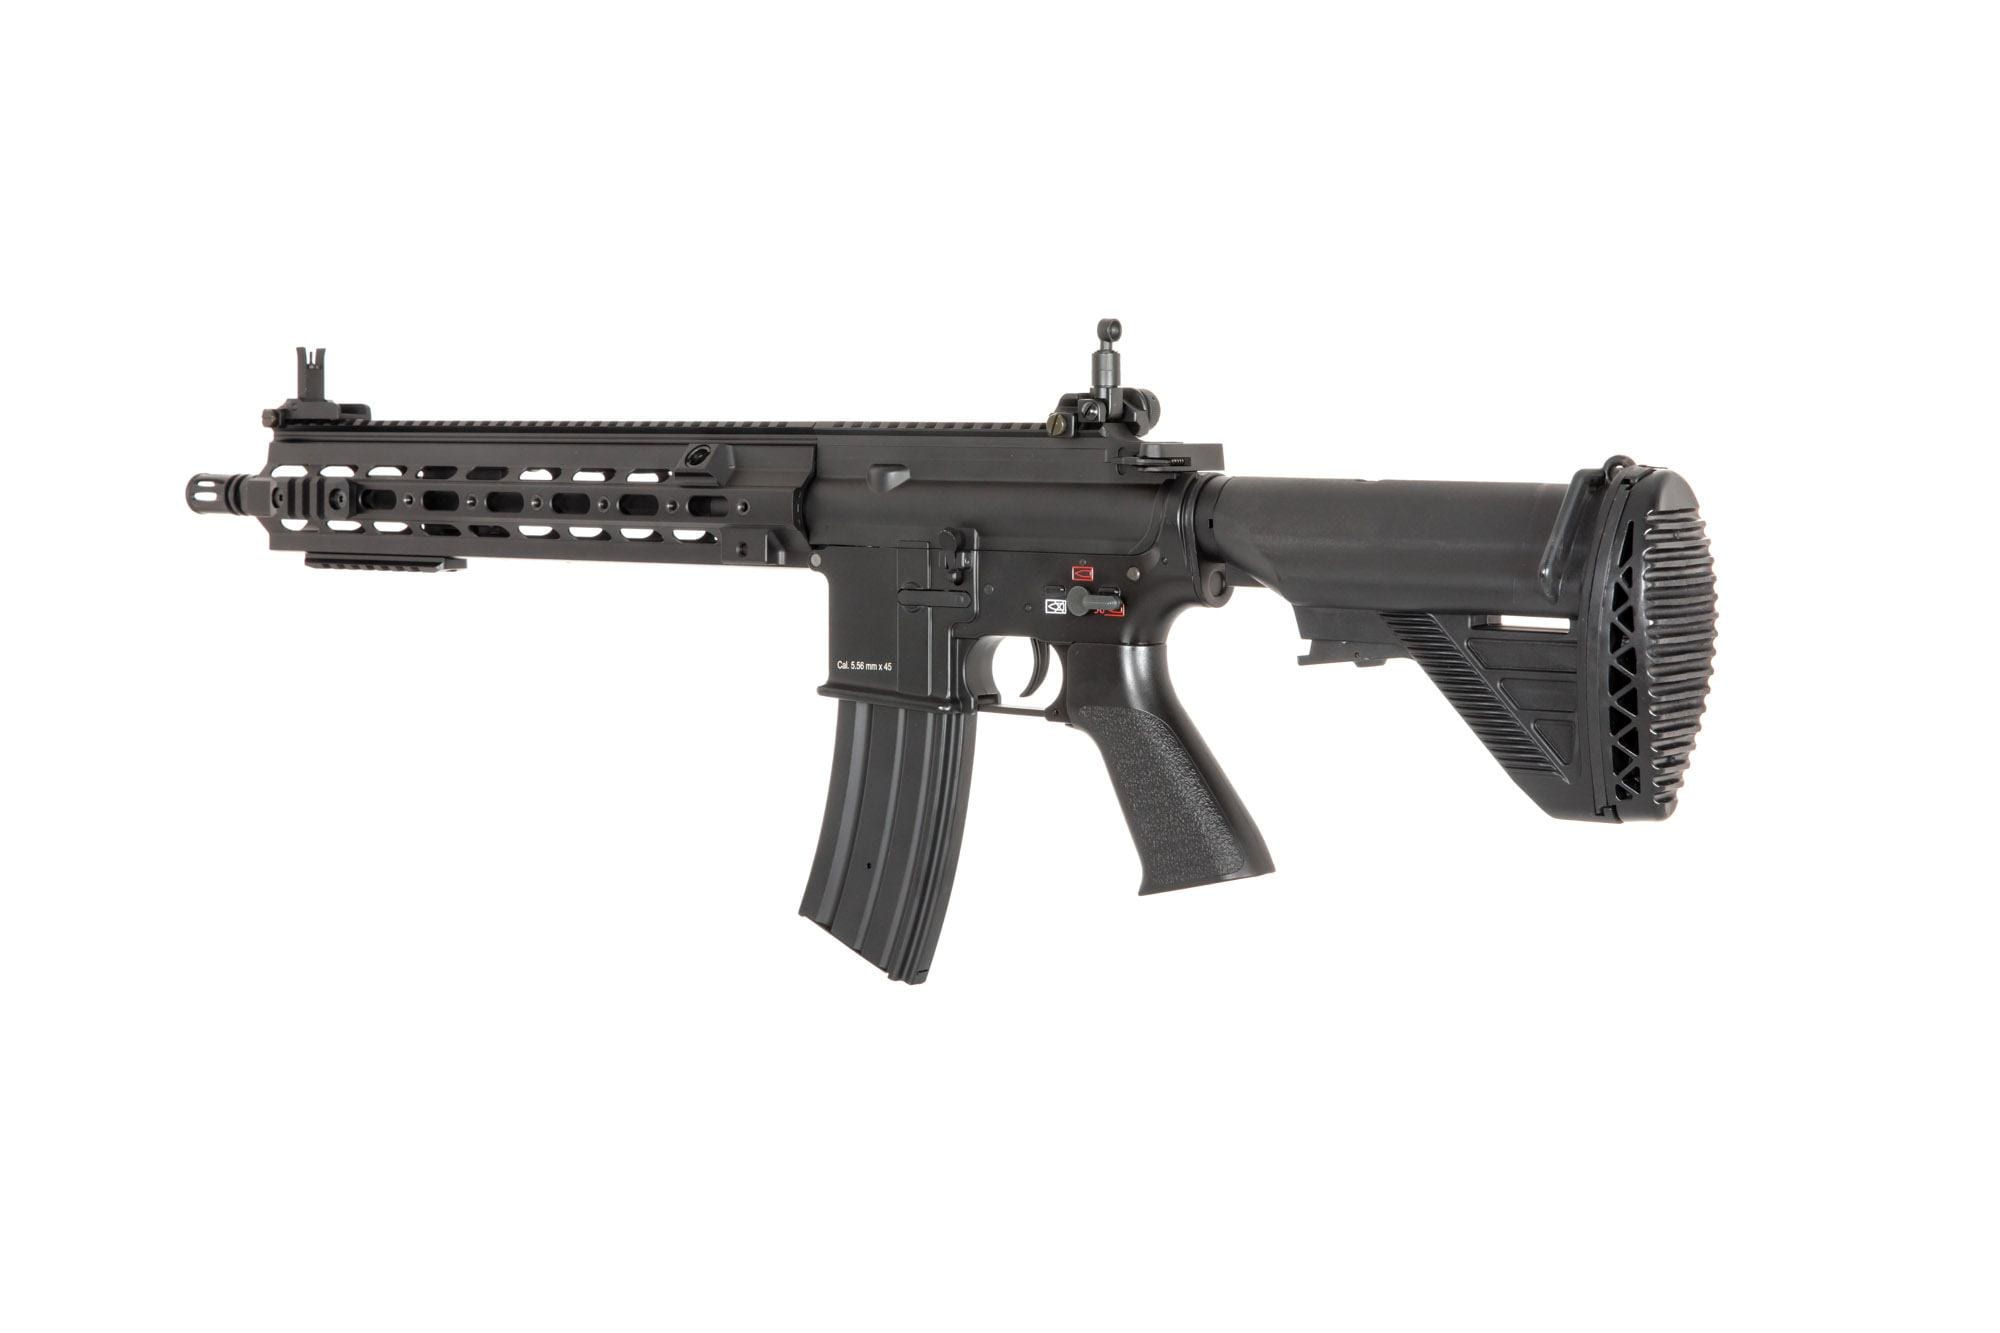 HK416A5 812S Carbine Replica - black